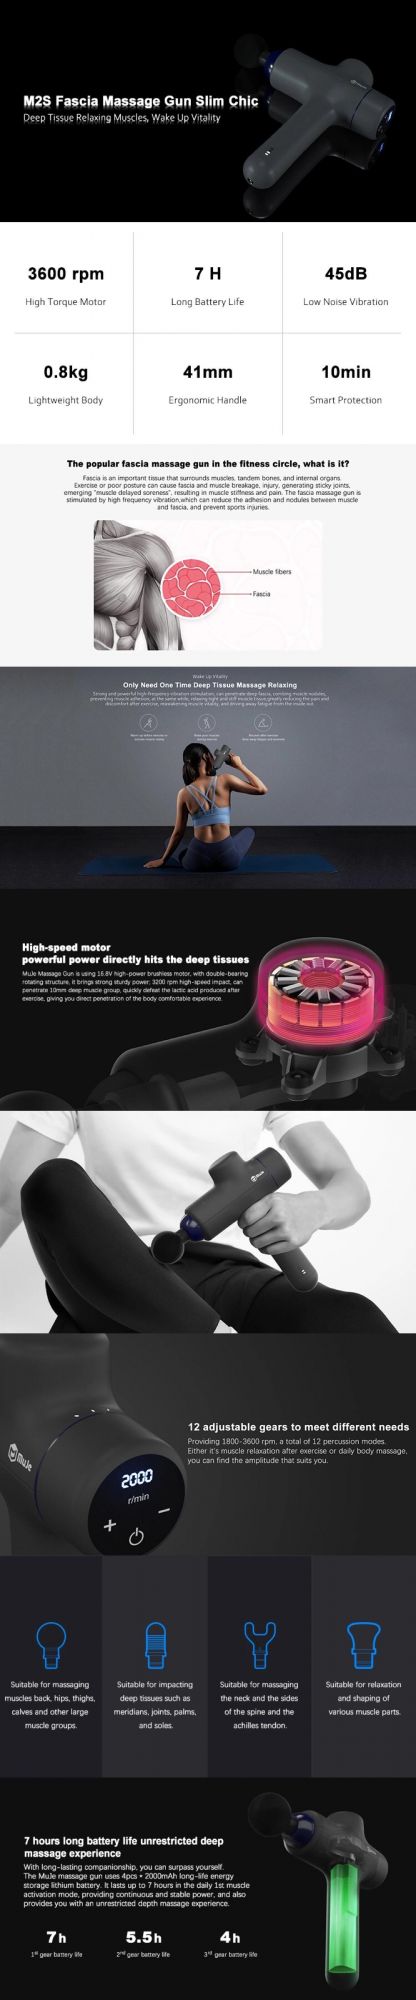 Deep Tissue Fascia Massager for Gym to Relax Massage Gun